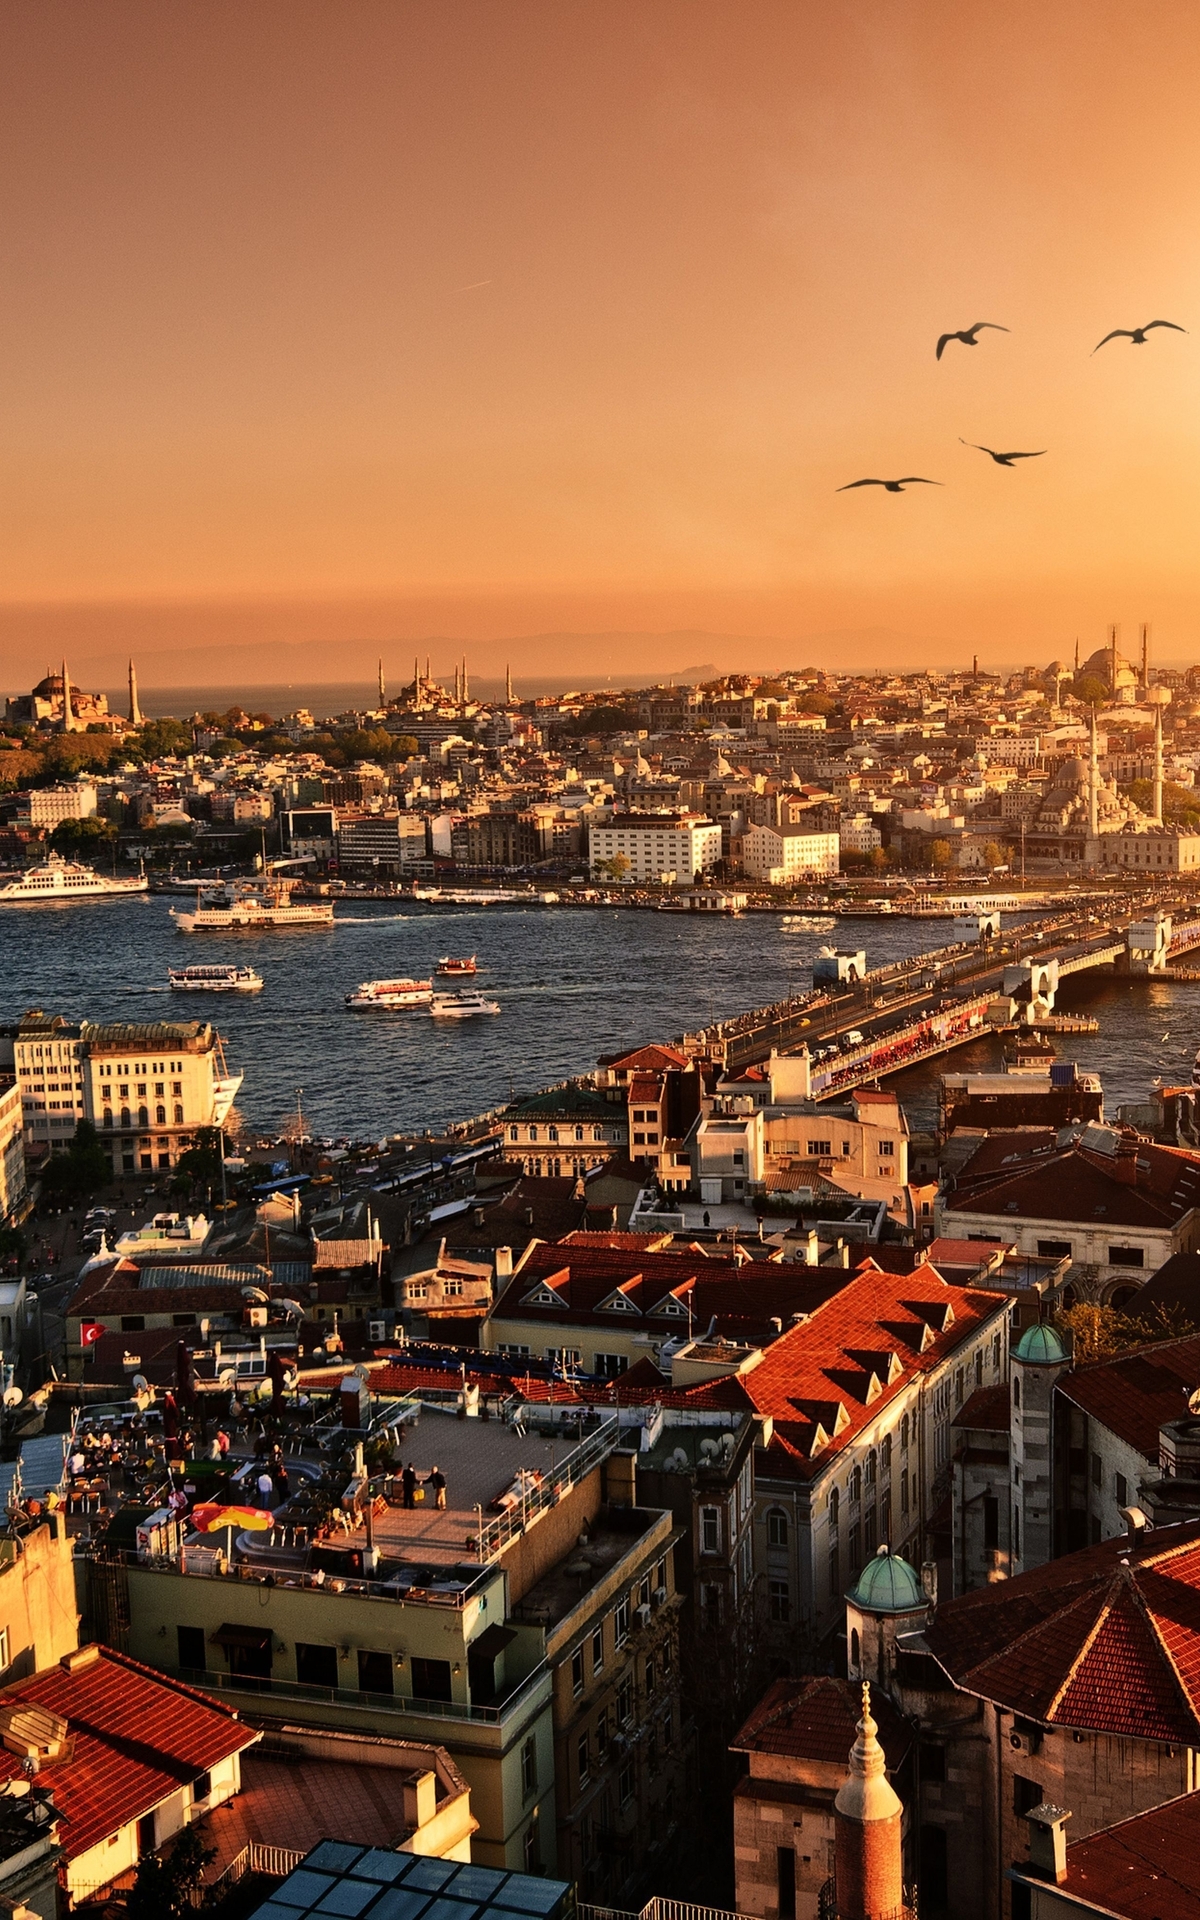 Image: Turkey, Istanbul, landscape, city, river, Galata bridge, evening, sunset, sun, birds, flock